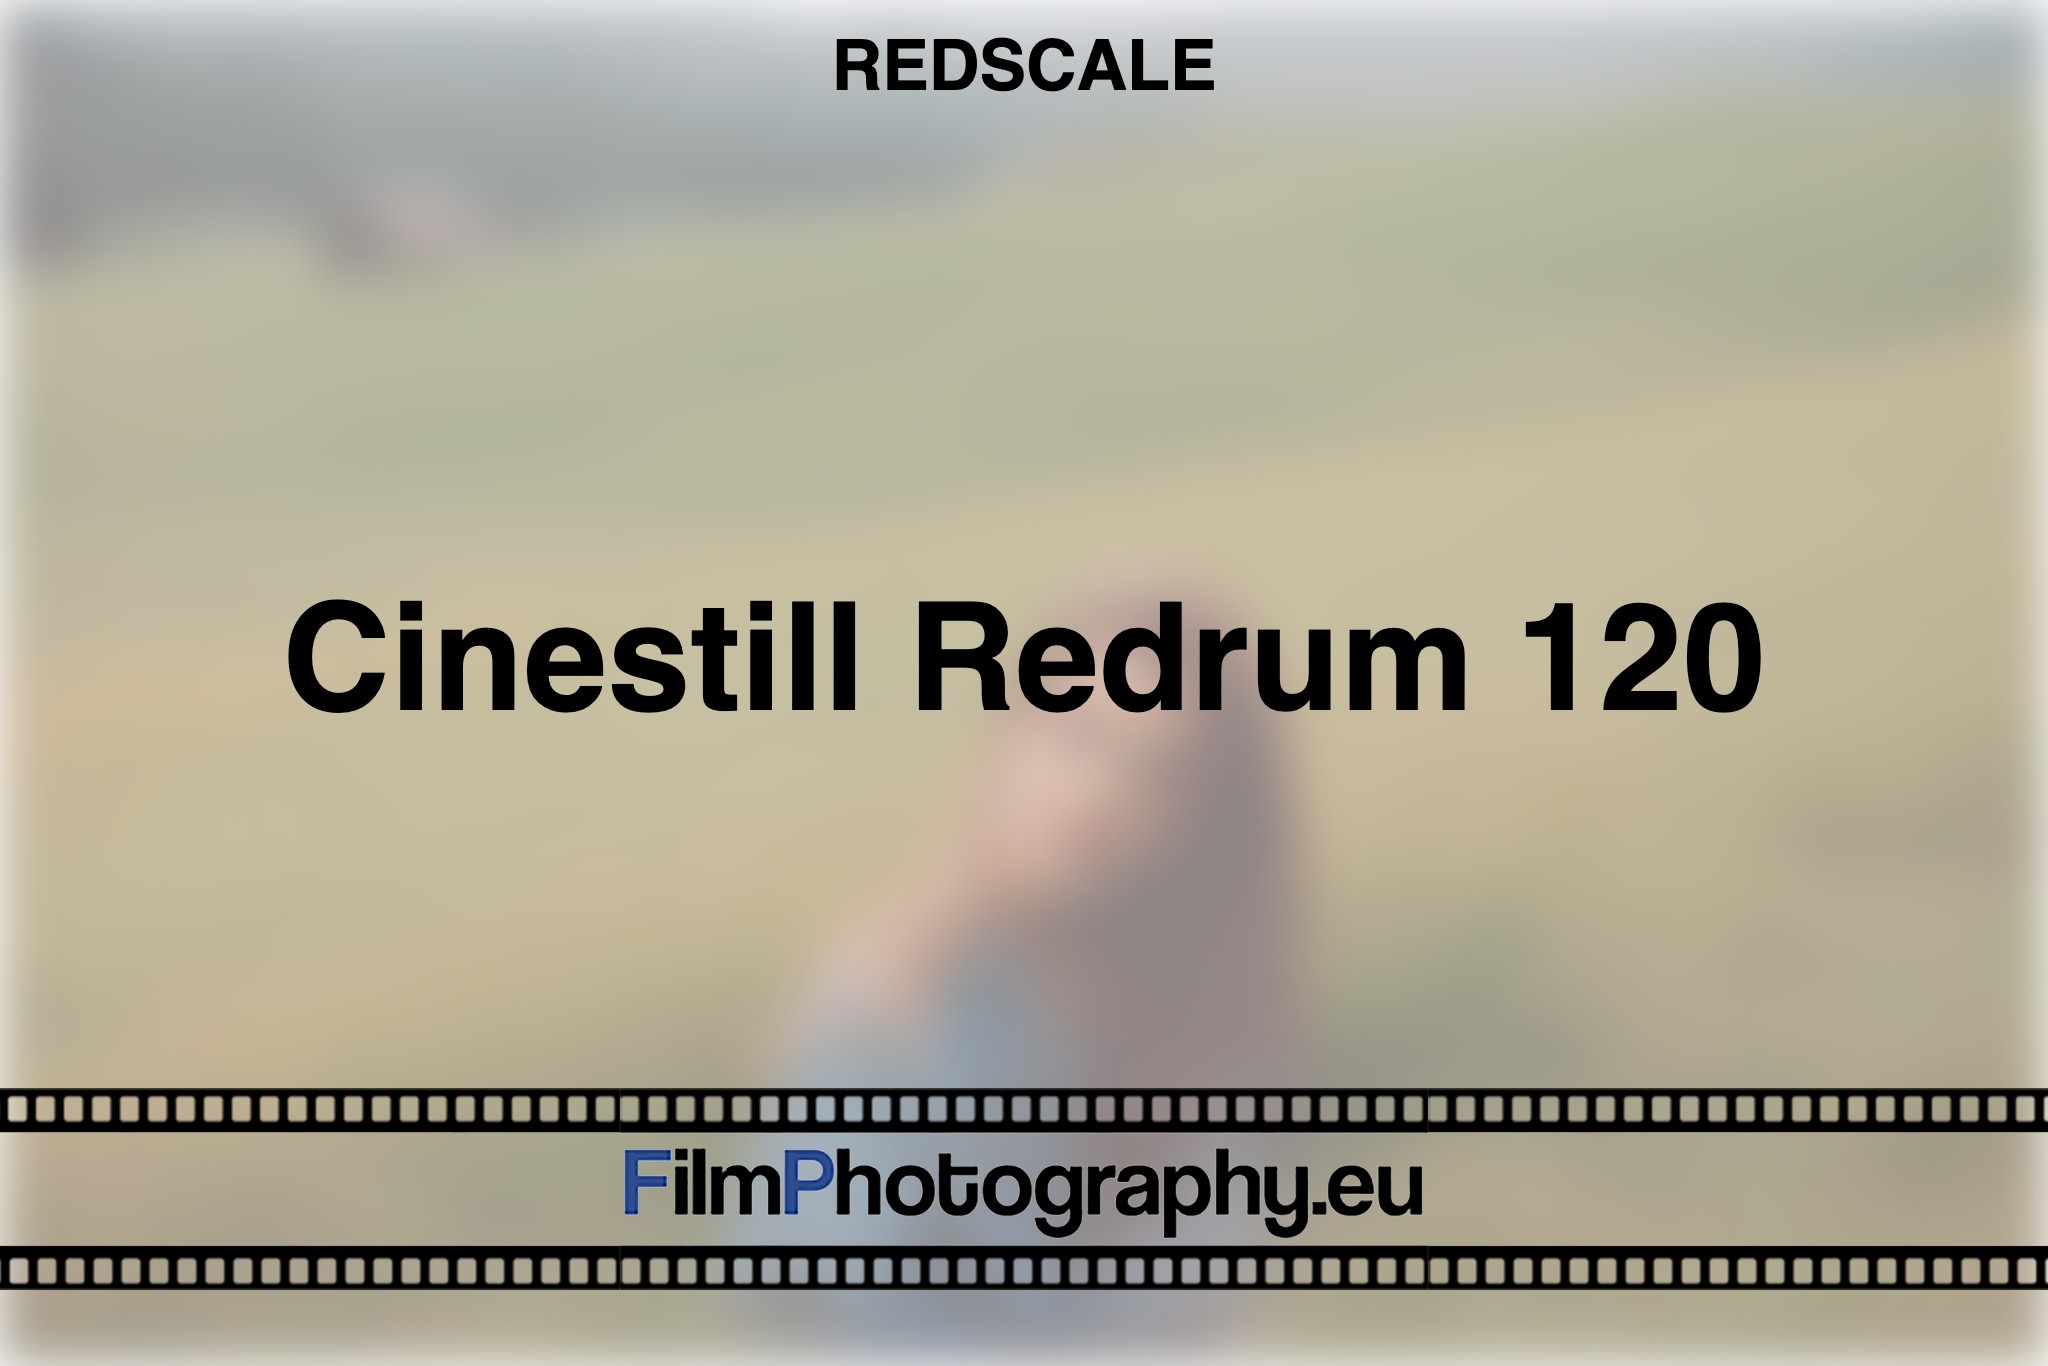 cinestill-redrum-120-redscale-bnv